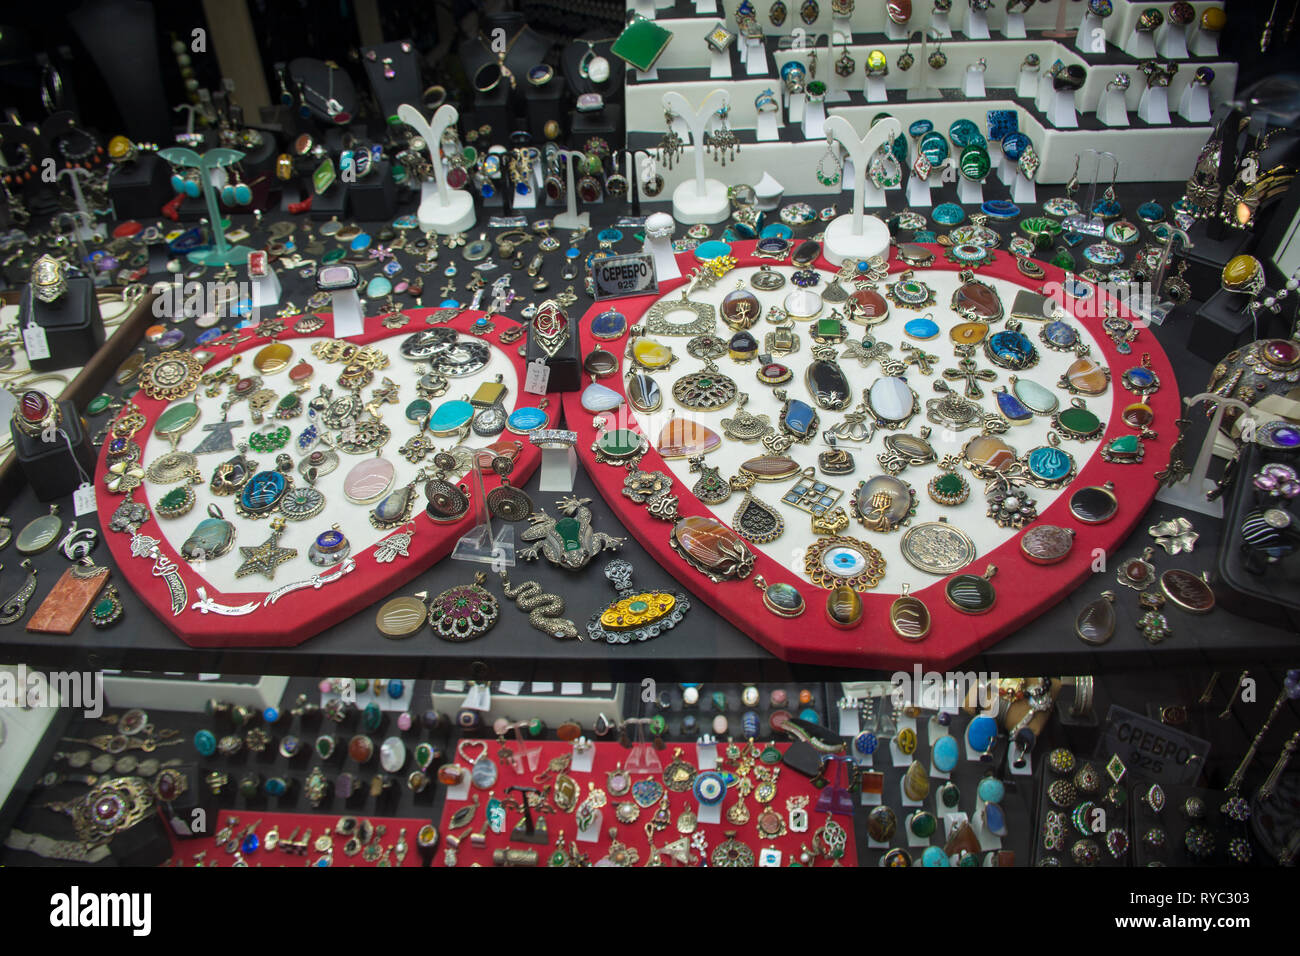 Antique Jewellery on display Istanbul Turkey Stock Photo